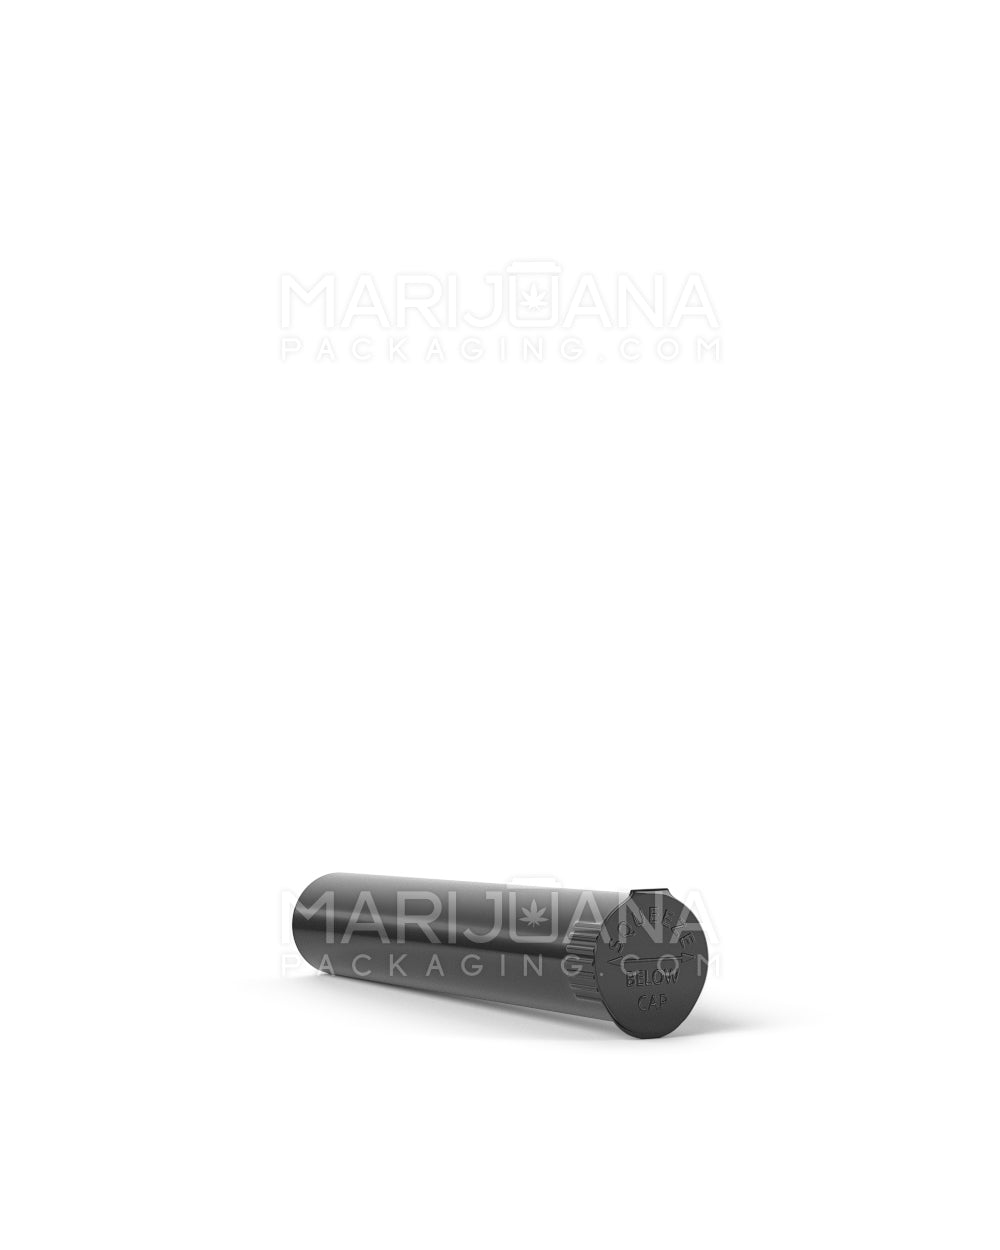 Child Resistant | Pop Top Vape Cartridge Tube | 80mm - Black - 1000 Count - 7